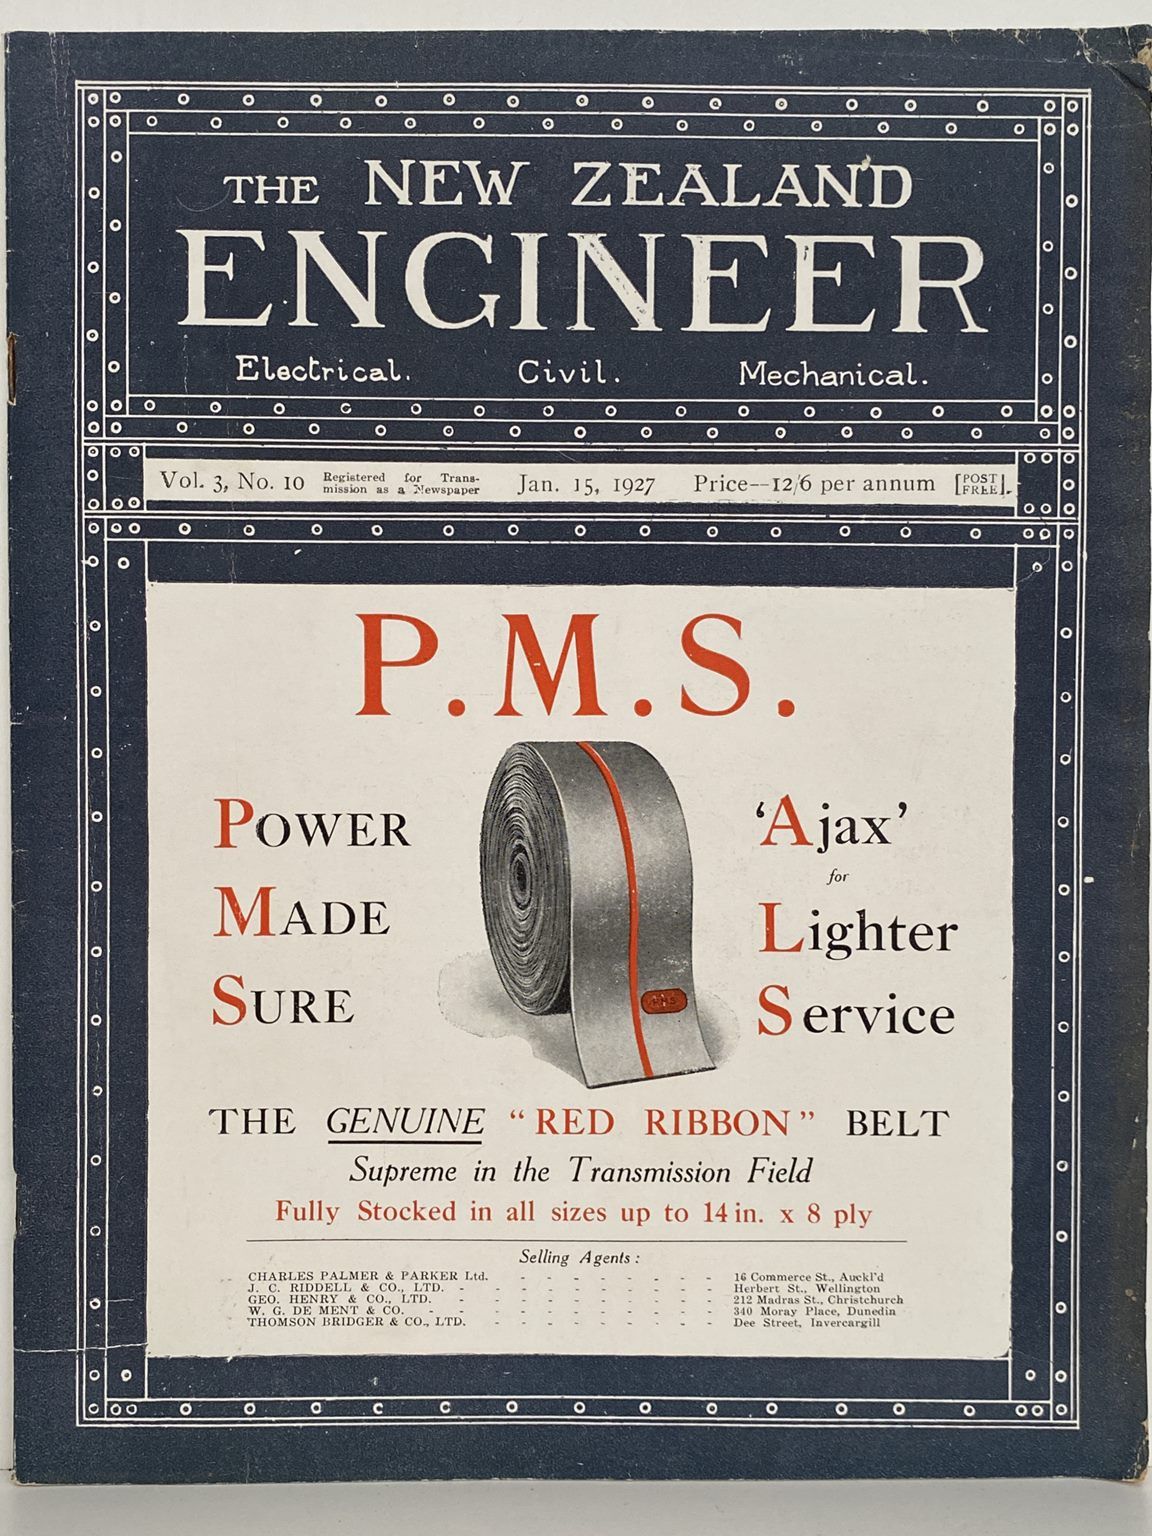 OLD MAGAZINE: The New Zealand Engineer Vol. 3, No. 10 - 15 January 1927